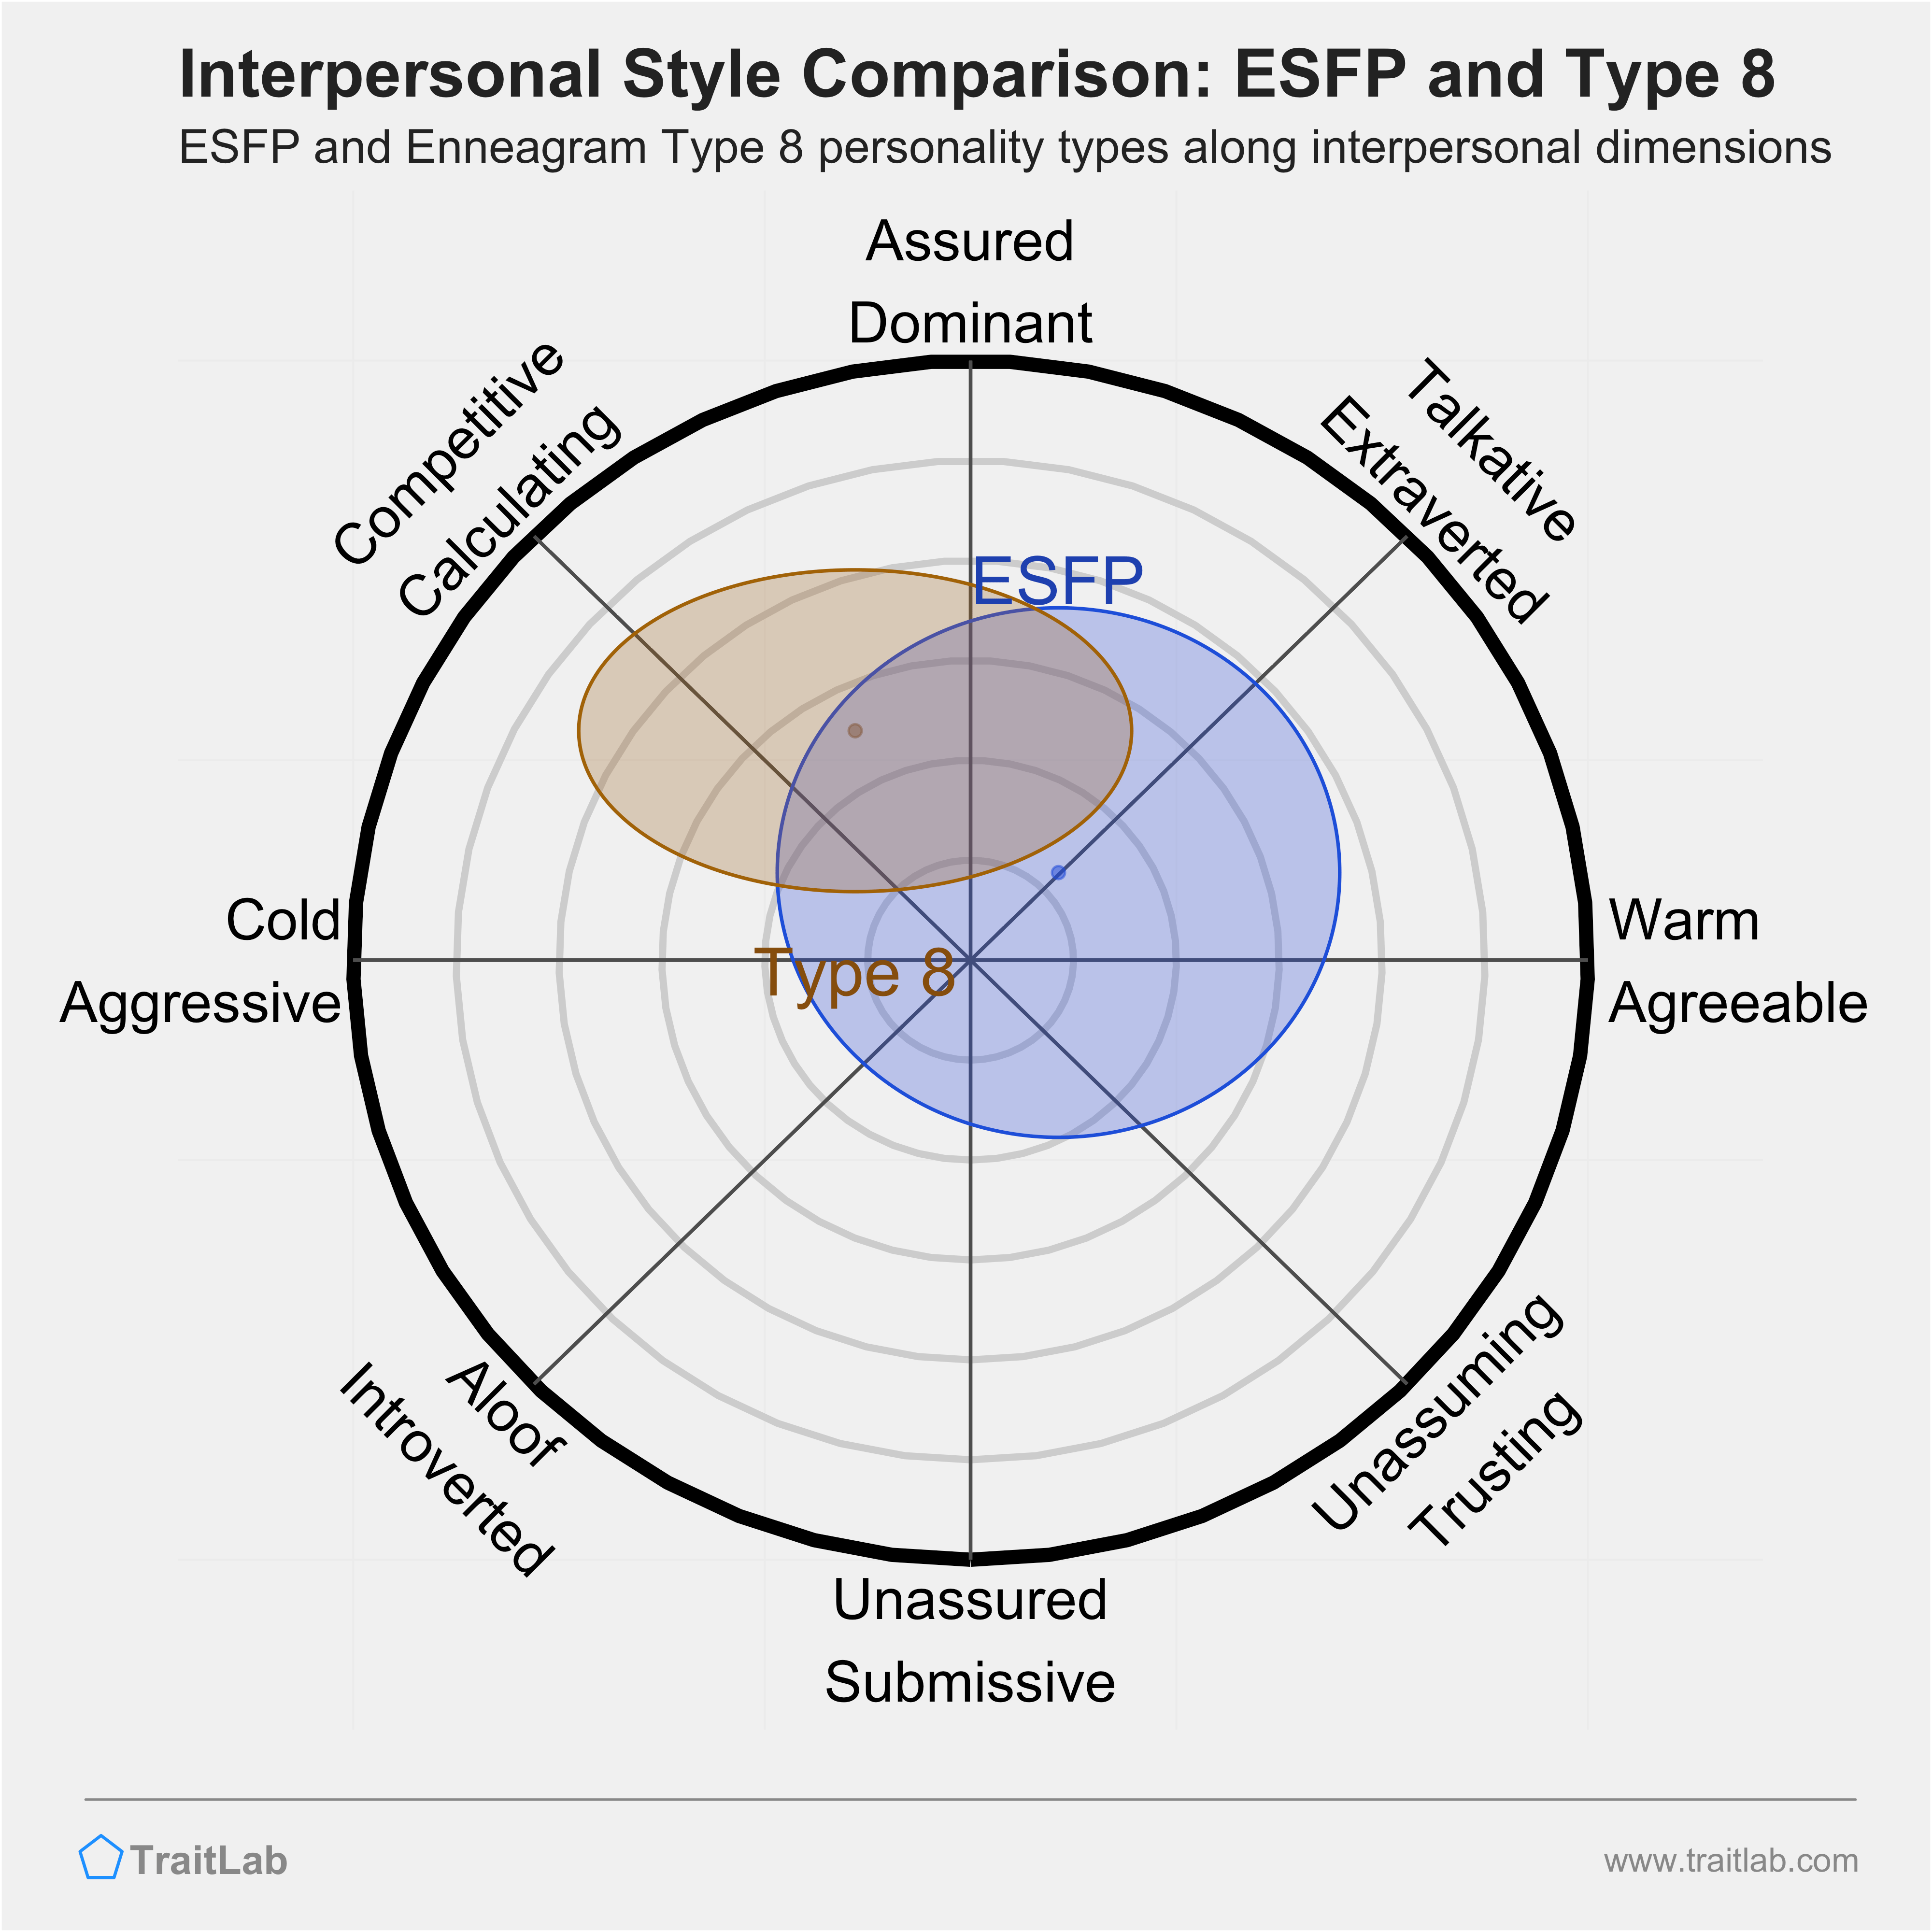 Enneagram ESFP and Type 8 comparison across interpersonal dimensions